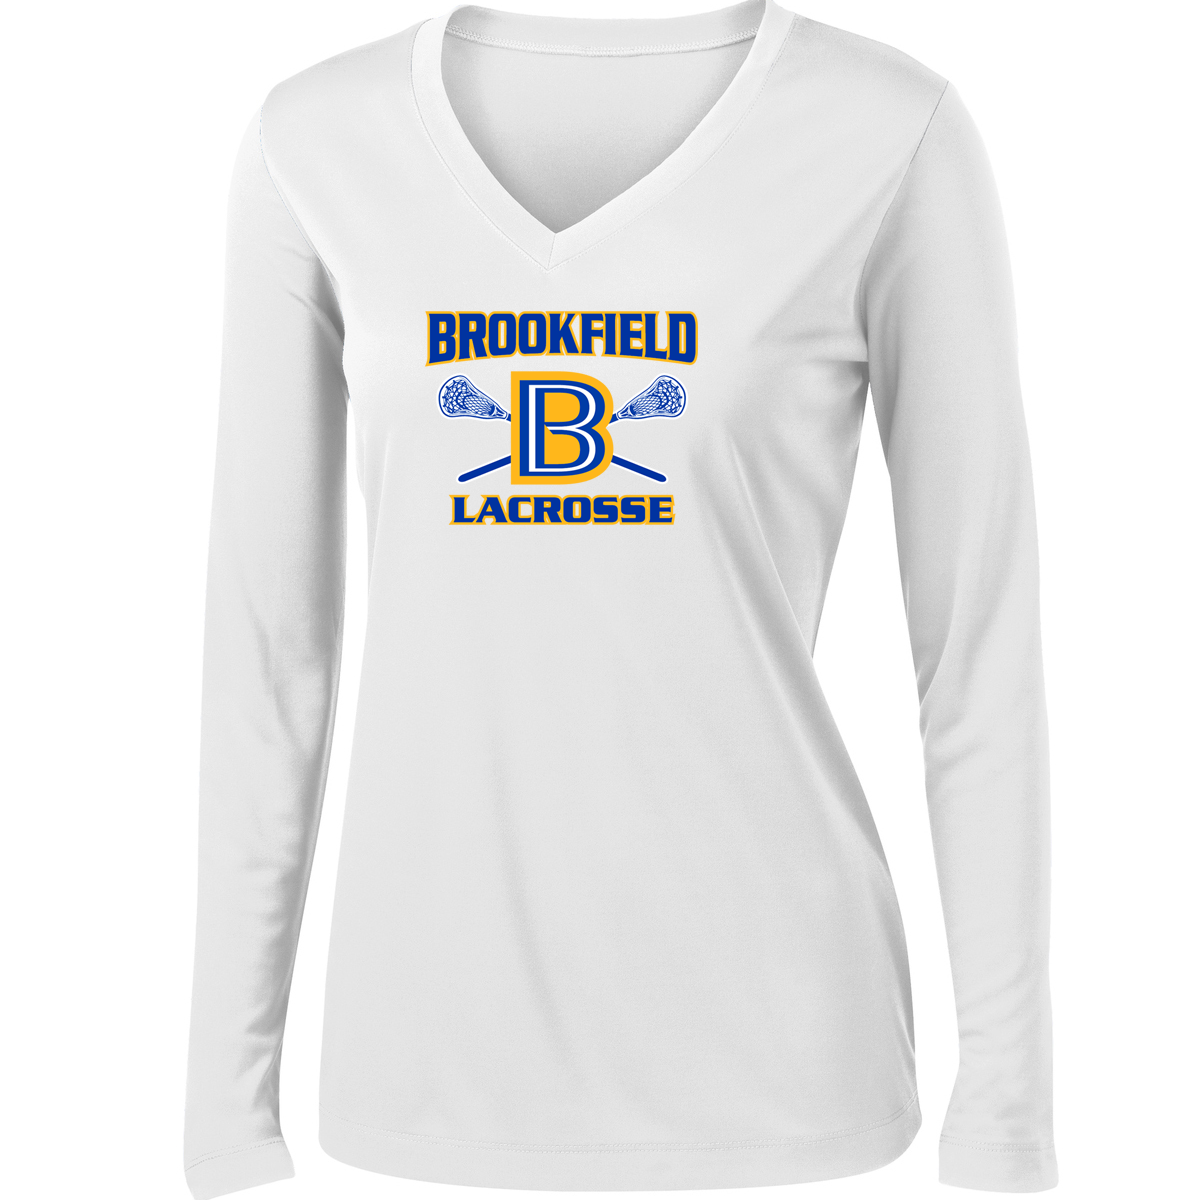 Brookfield Lacrosse Women's Long Sleeve Performance Shirt